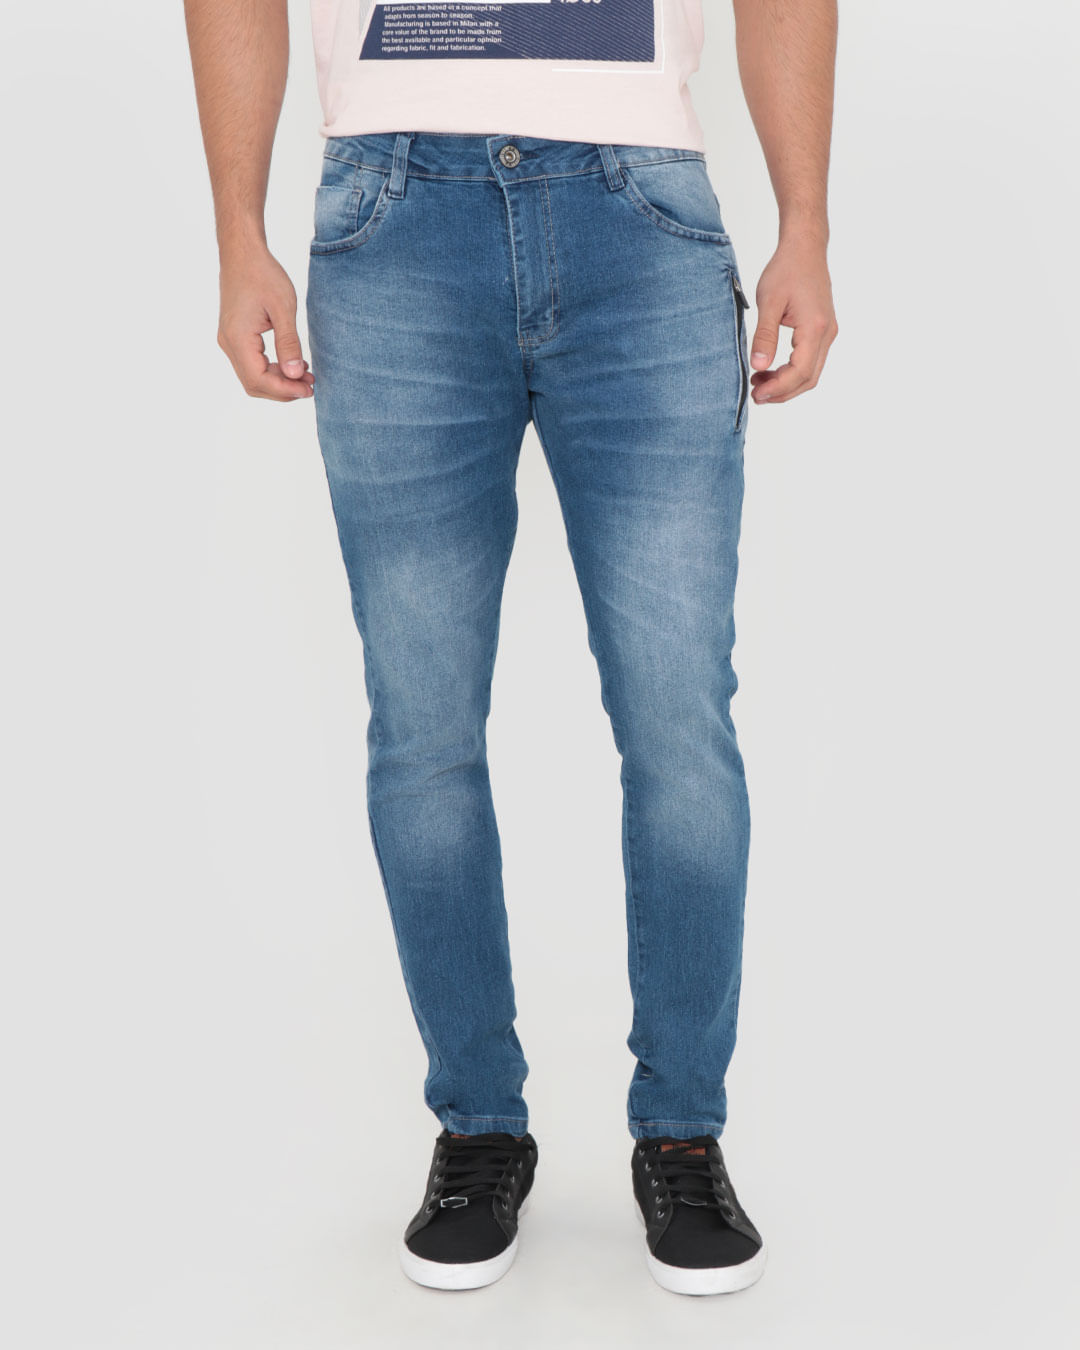 23121000940045-blue-jeans-medio-1